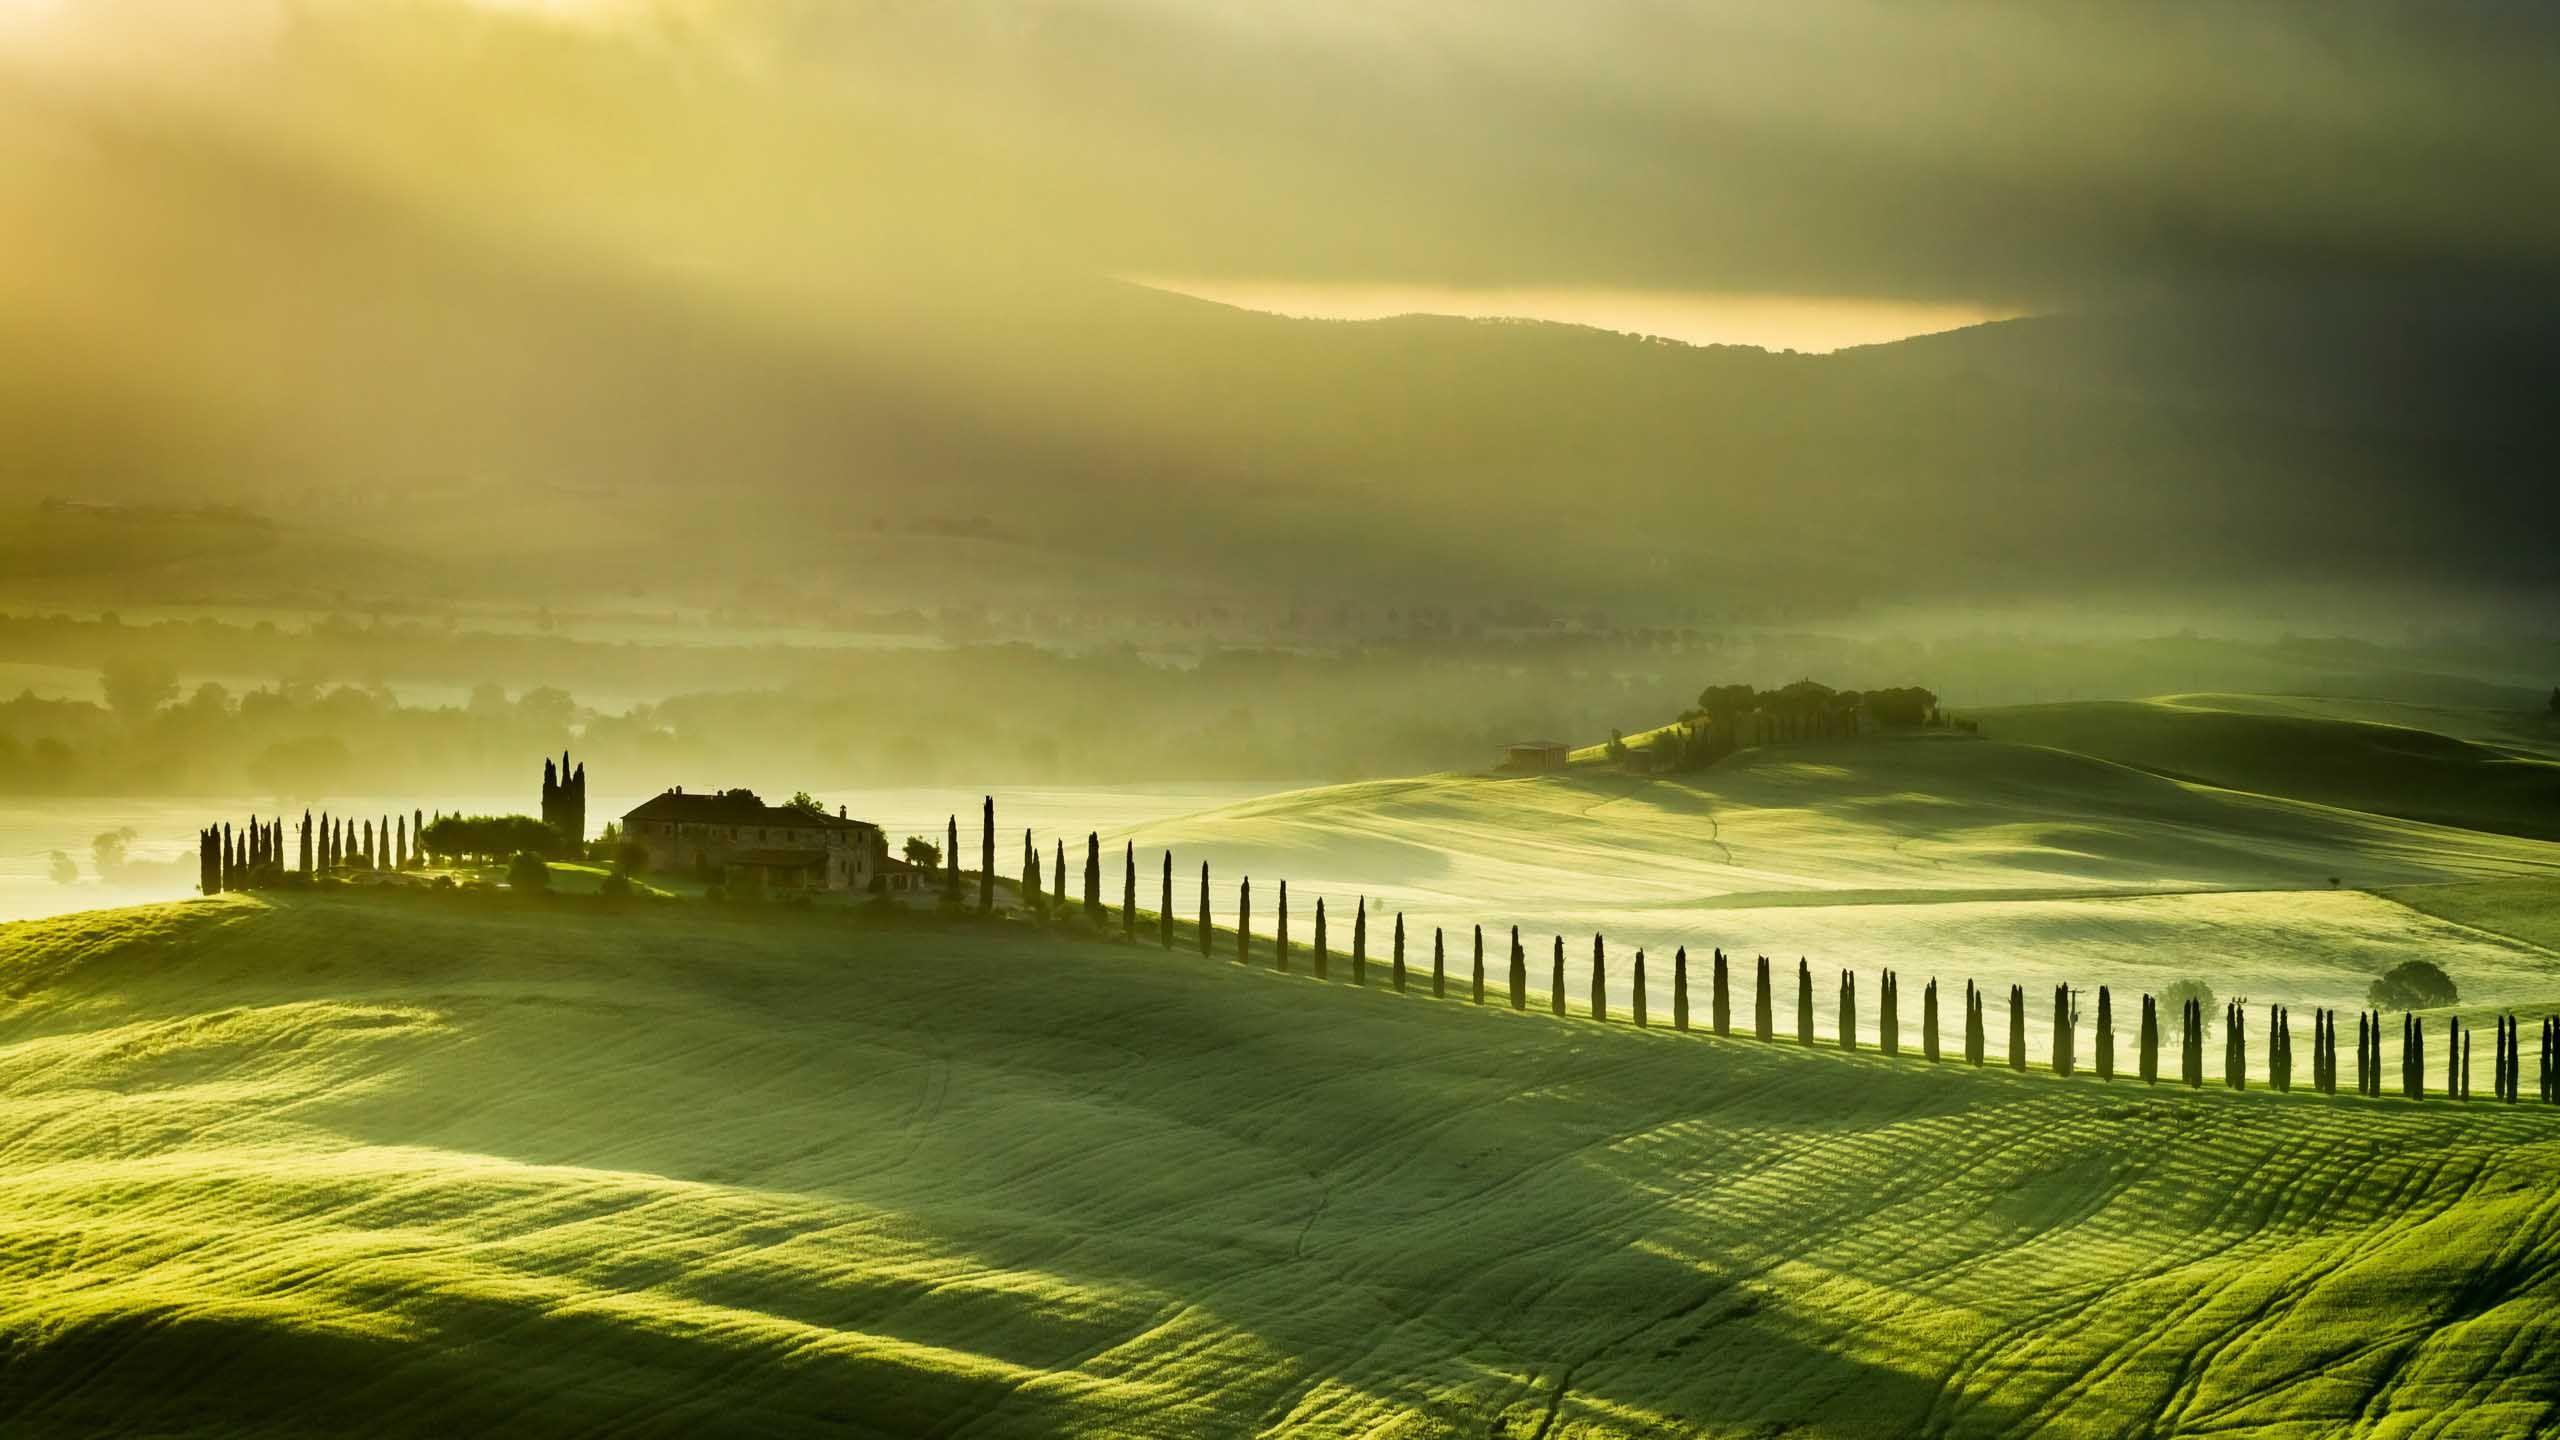 Landscape Tuscany Italy Green Farm Landscape Hills Background Image